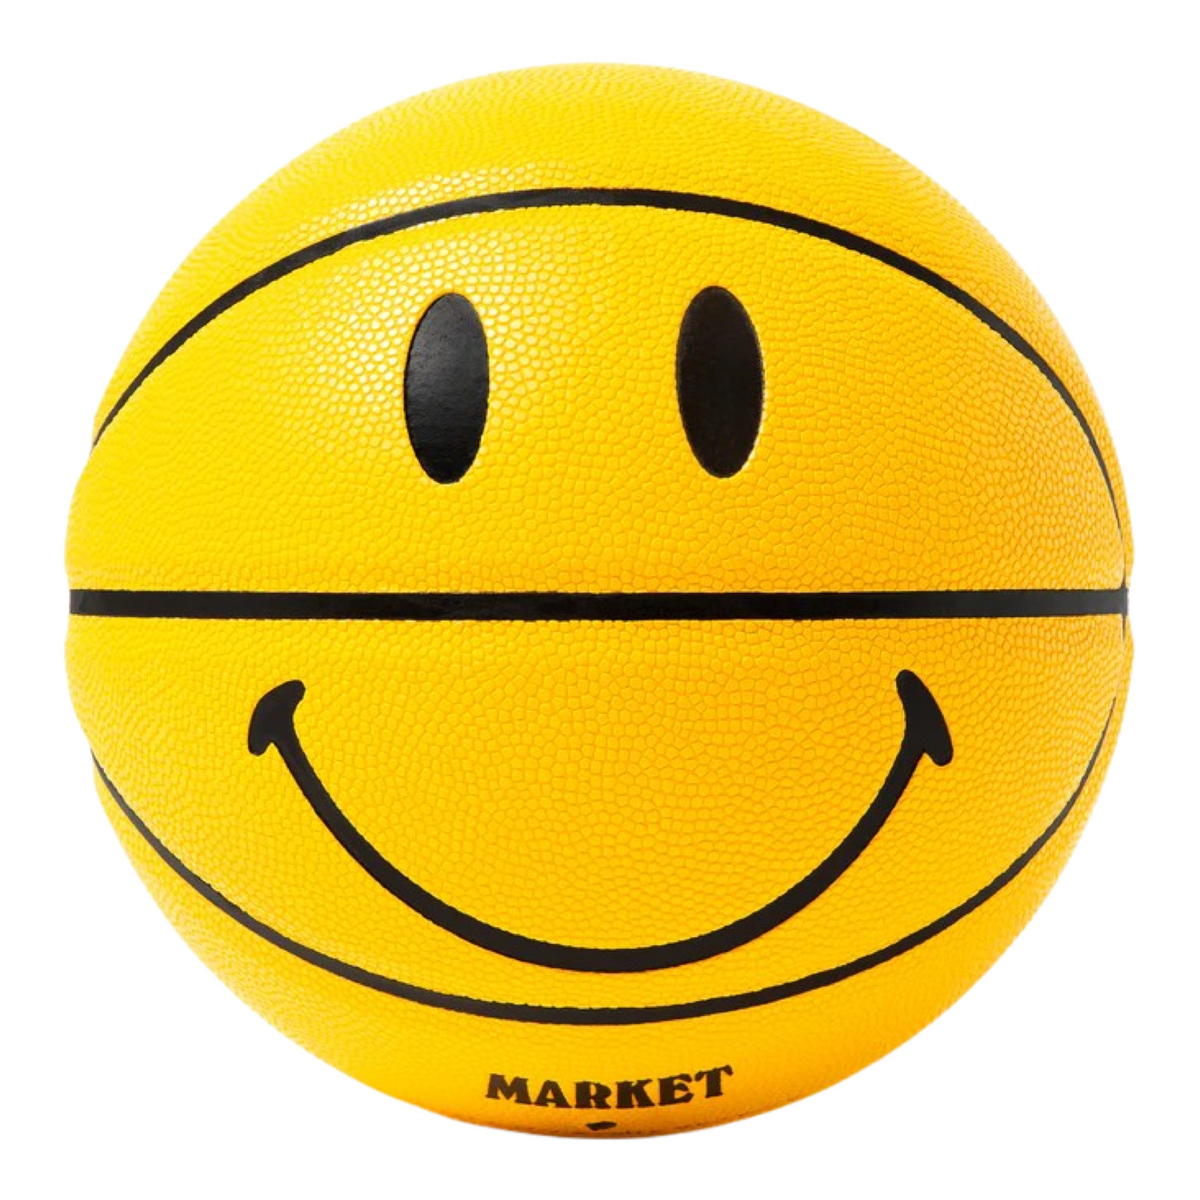 MARKET SMILEY BASKETBALL